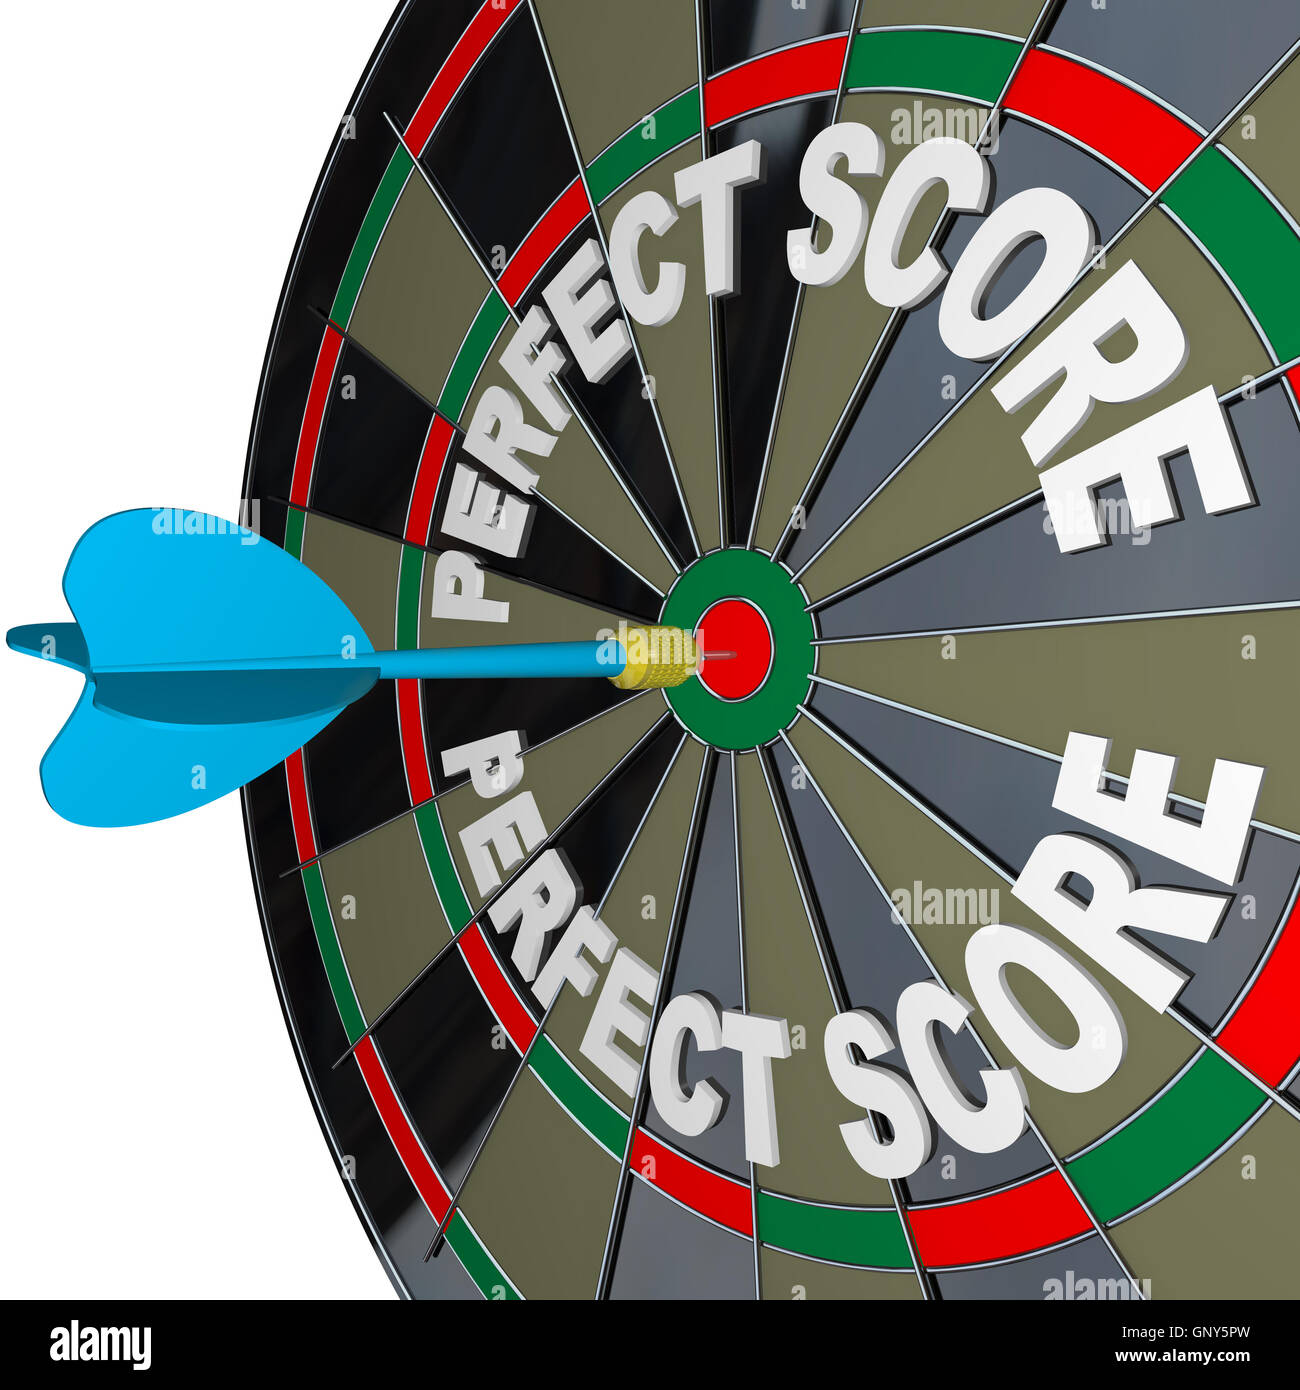 Perfect Score Words Dart on Dartboard Winner Stock Photo